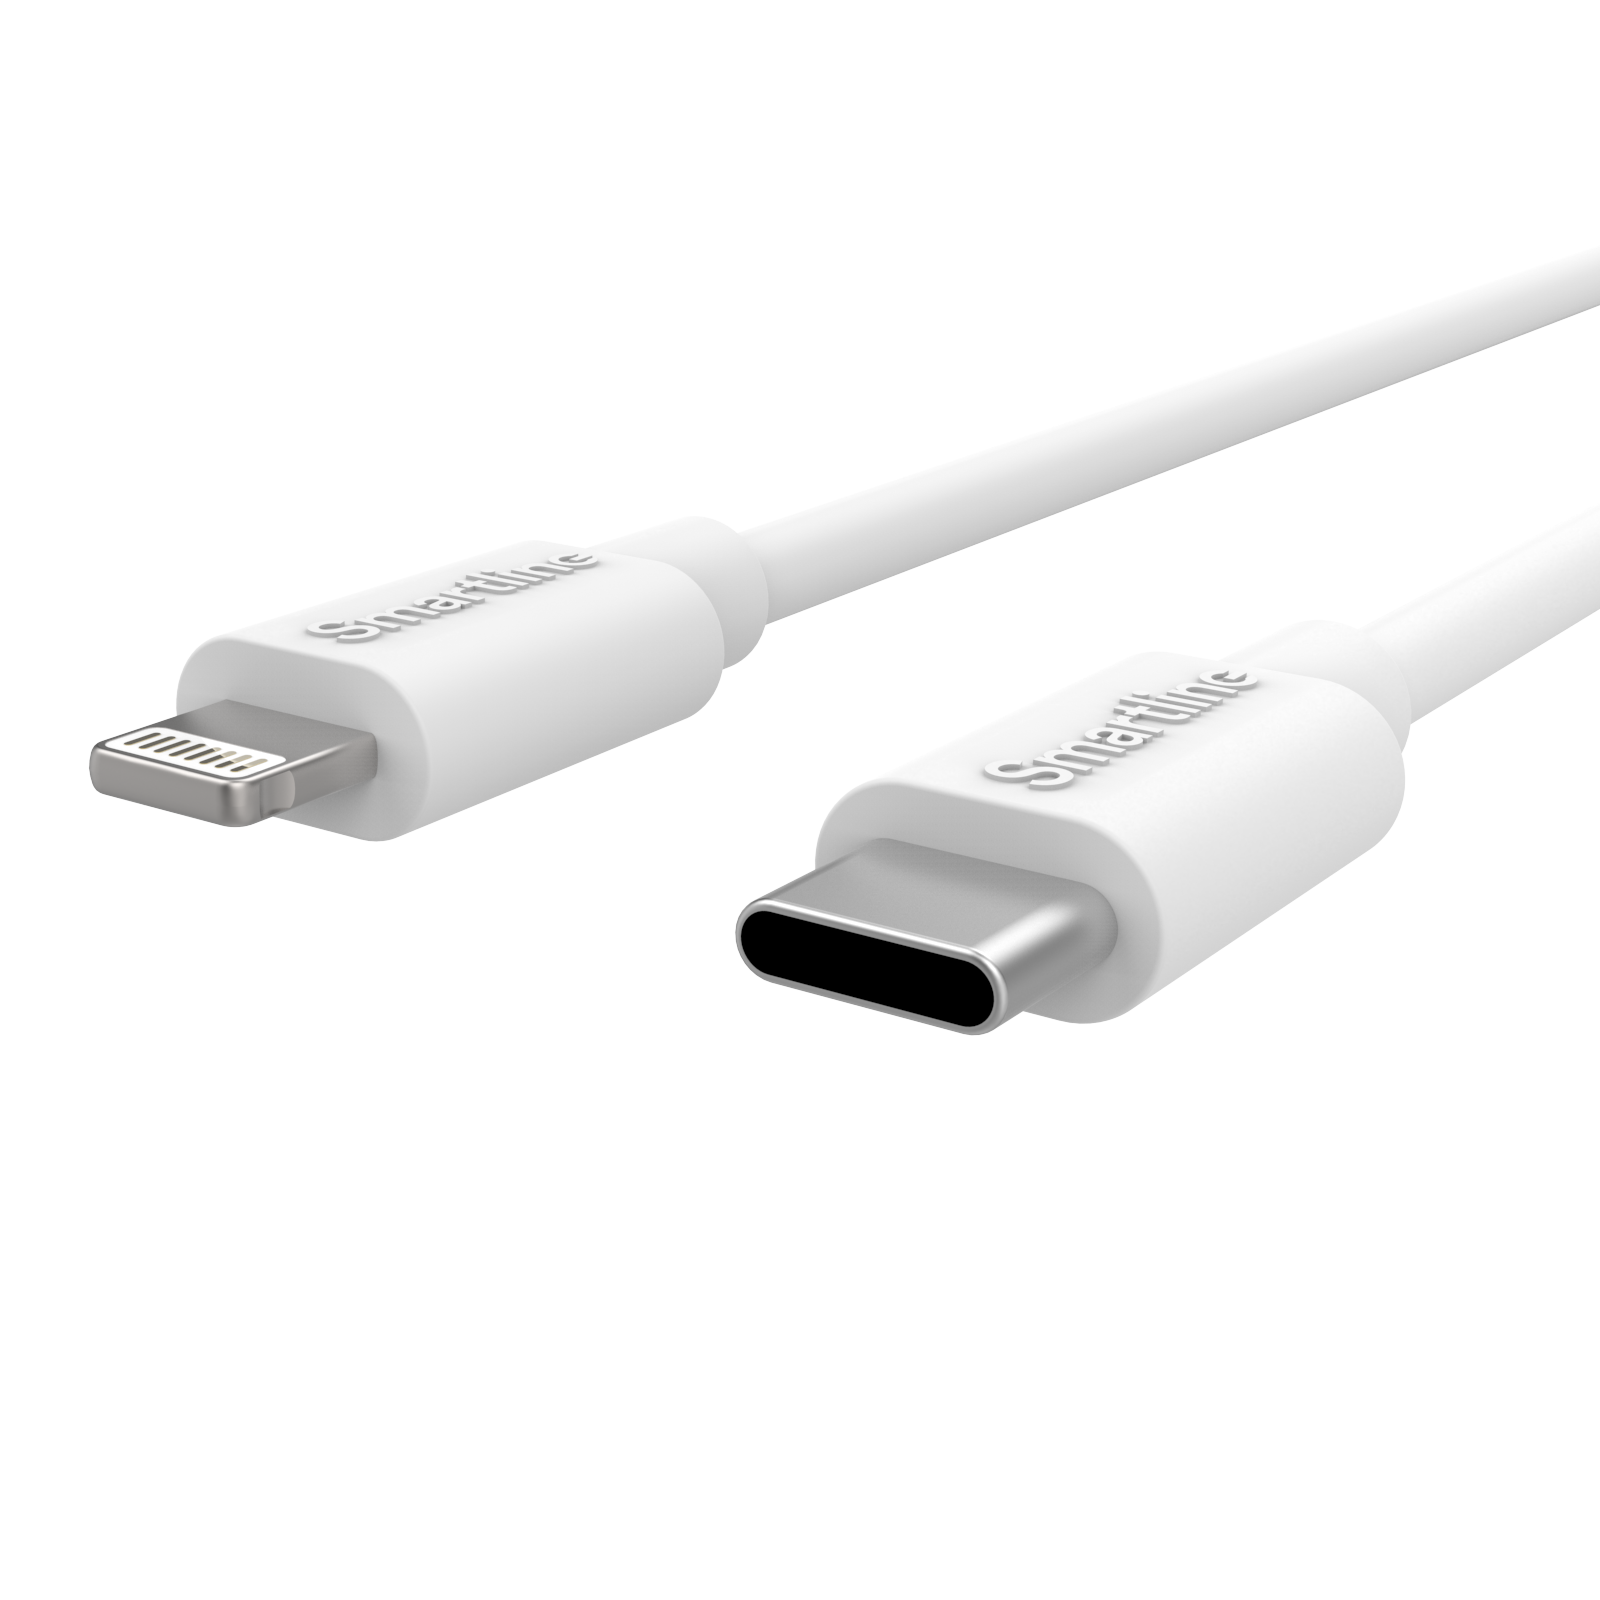 iPhone 14 Plus Kit för optimal laddning med 2m kabel, vit